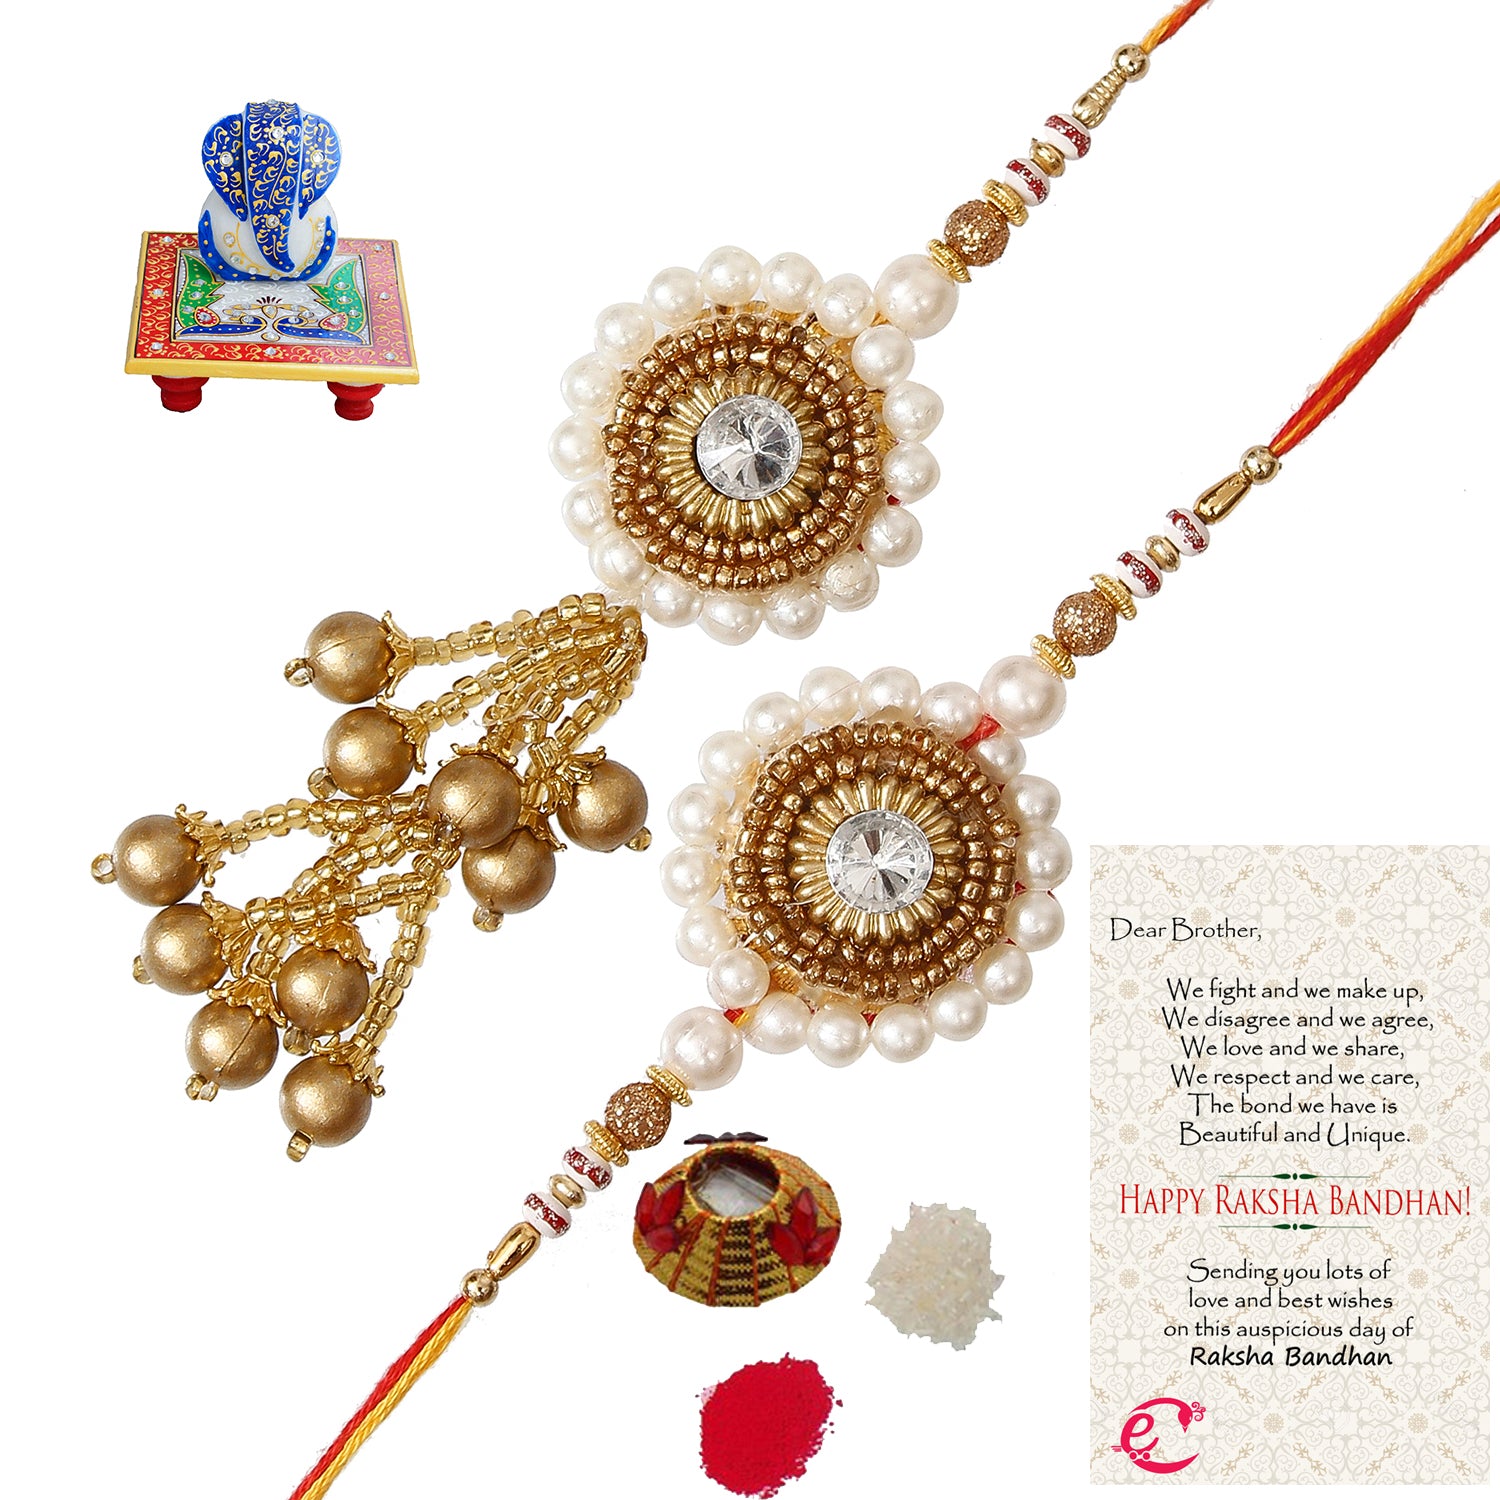 Designer Bhaiya Bhabhi Rakhi with Lord Ganesha on Marble Chowki and Roli Tikka Matki, Best Wishes Greeting Card